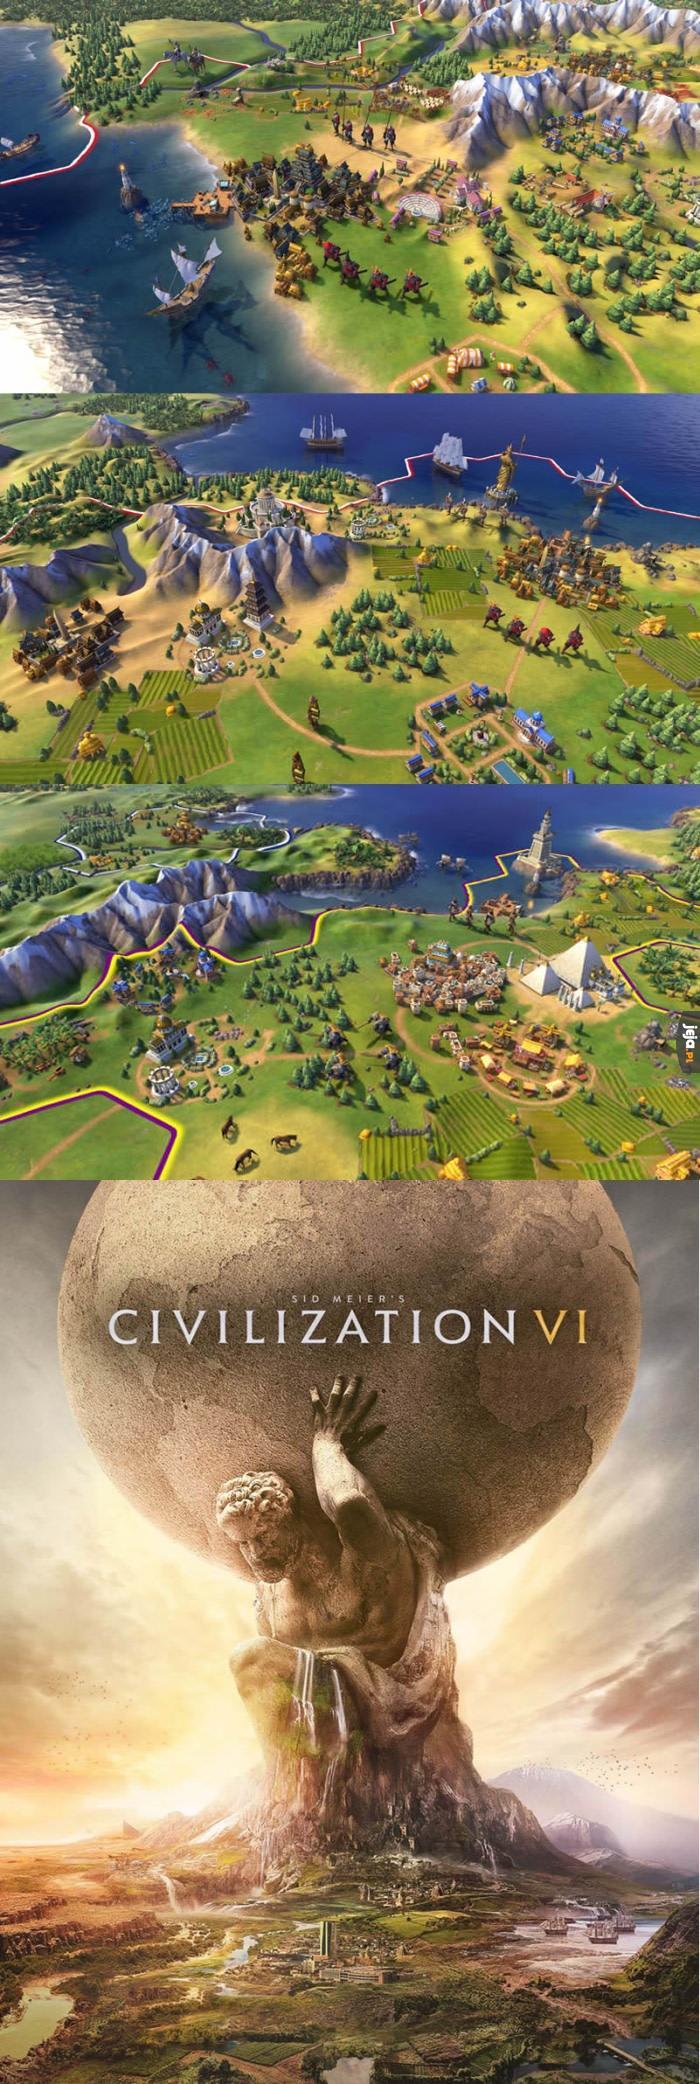 Co sądzicie o Civilization VI?